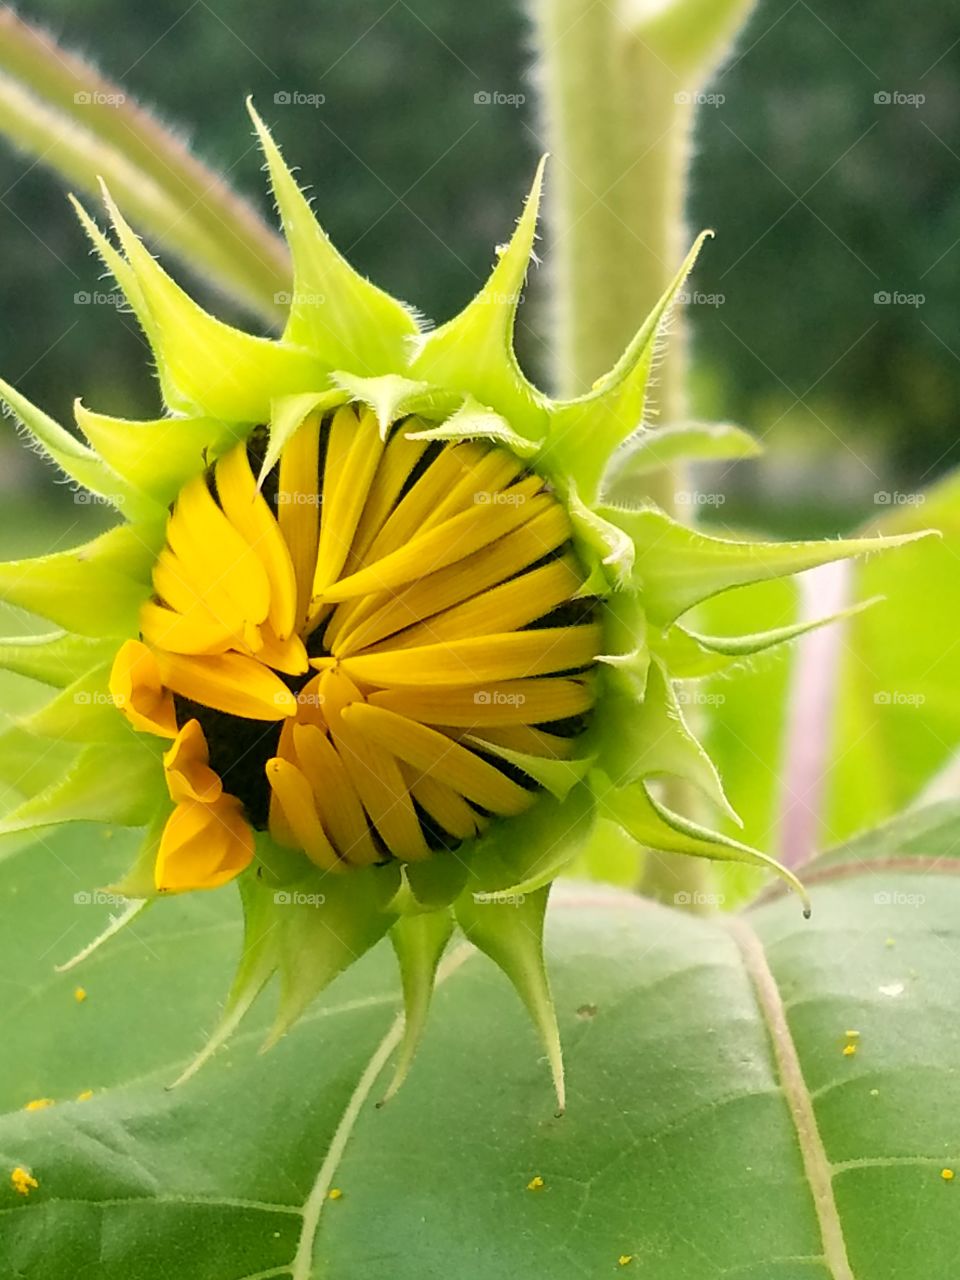 One seed made over 20 buds of sunflowers in my garden, Big Island,Hawaii.